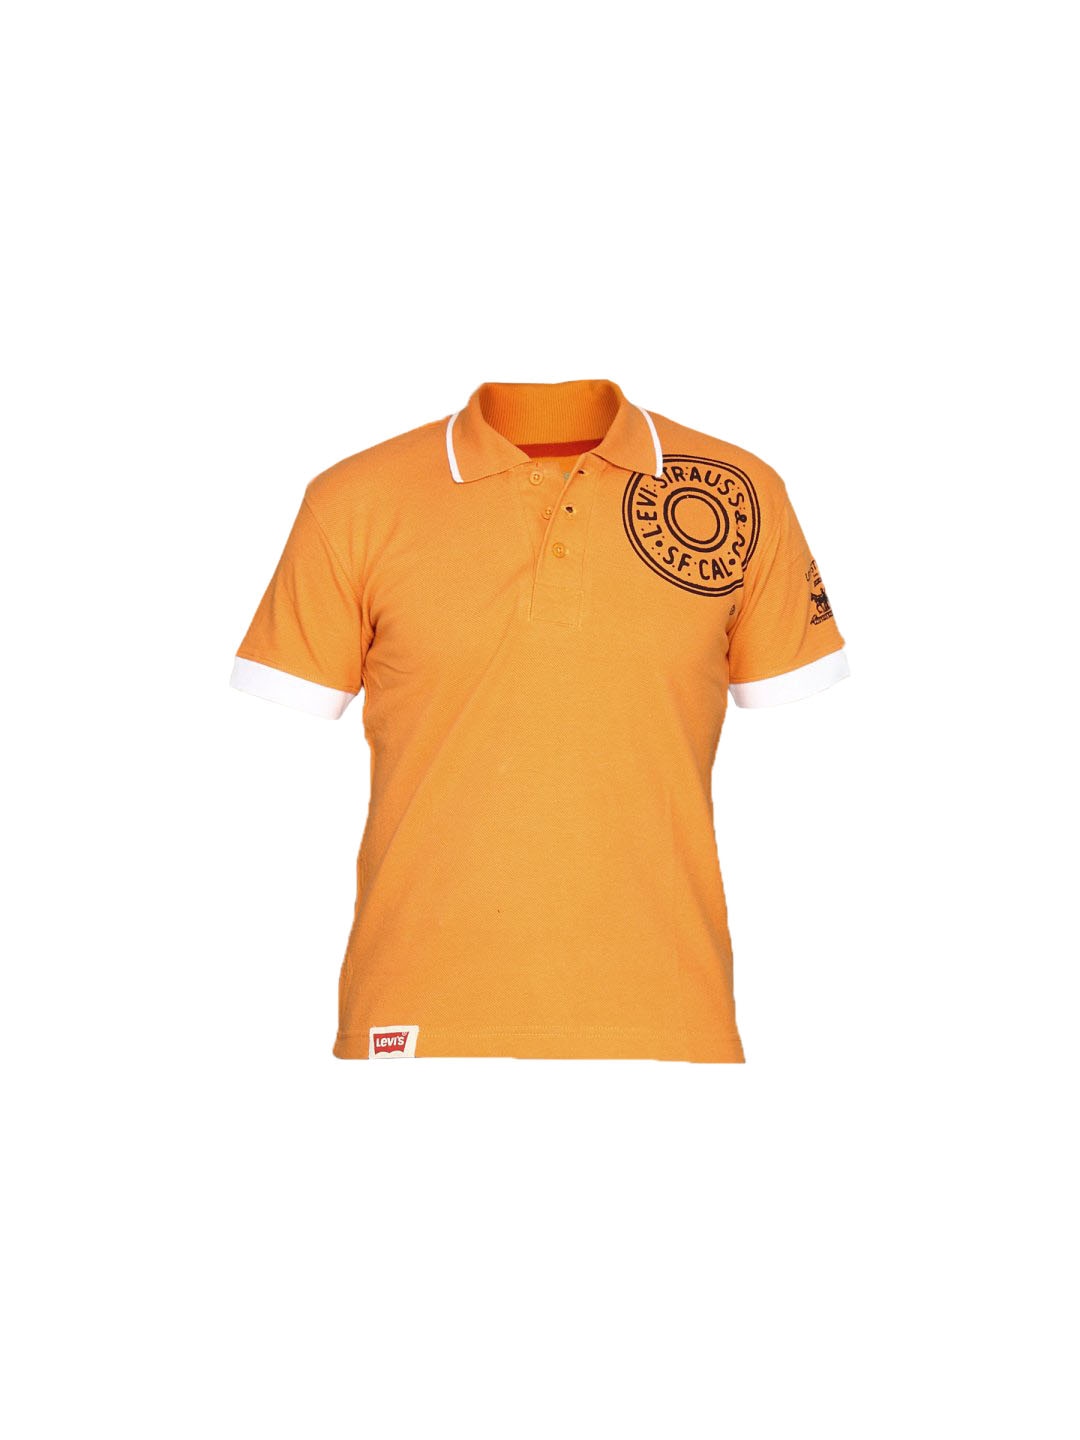 Levis Kids Boy's Orange Polo Tshirt